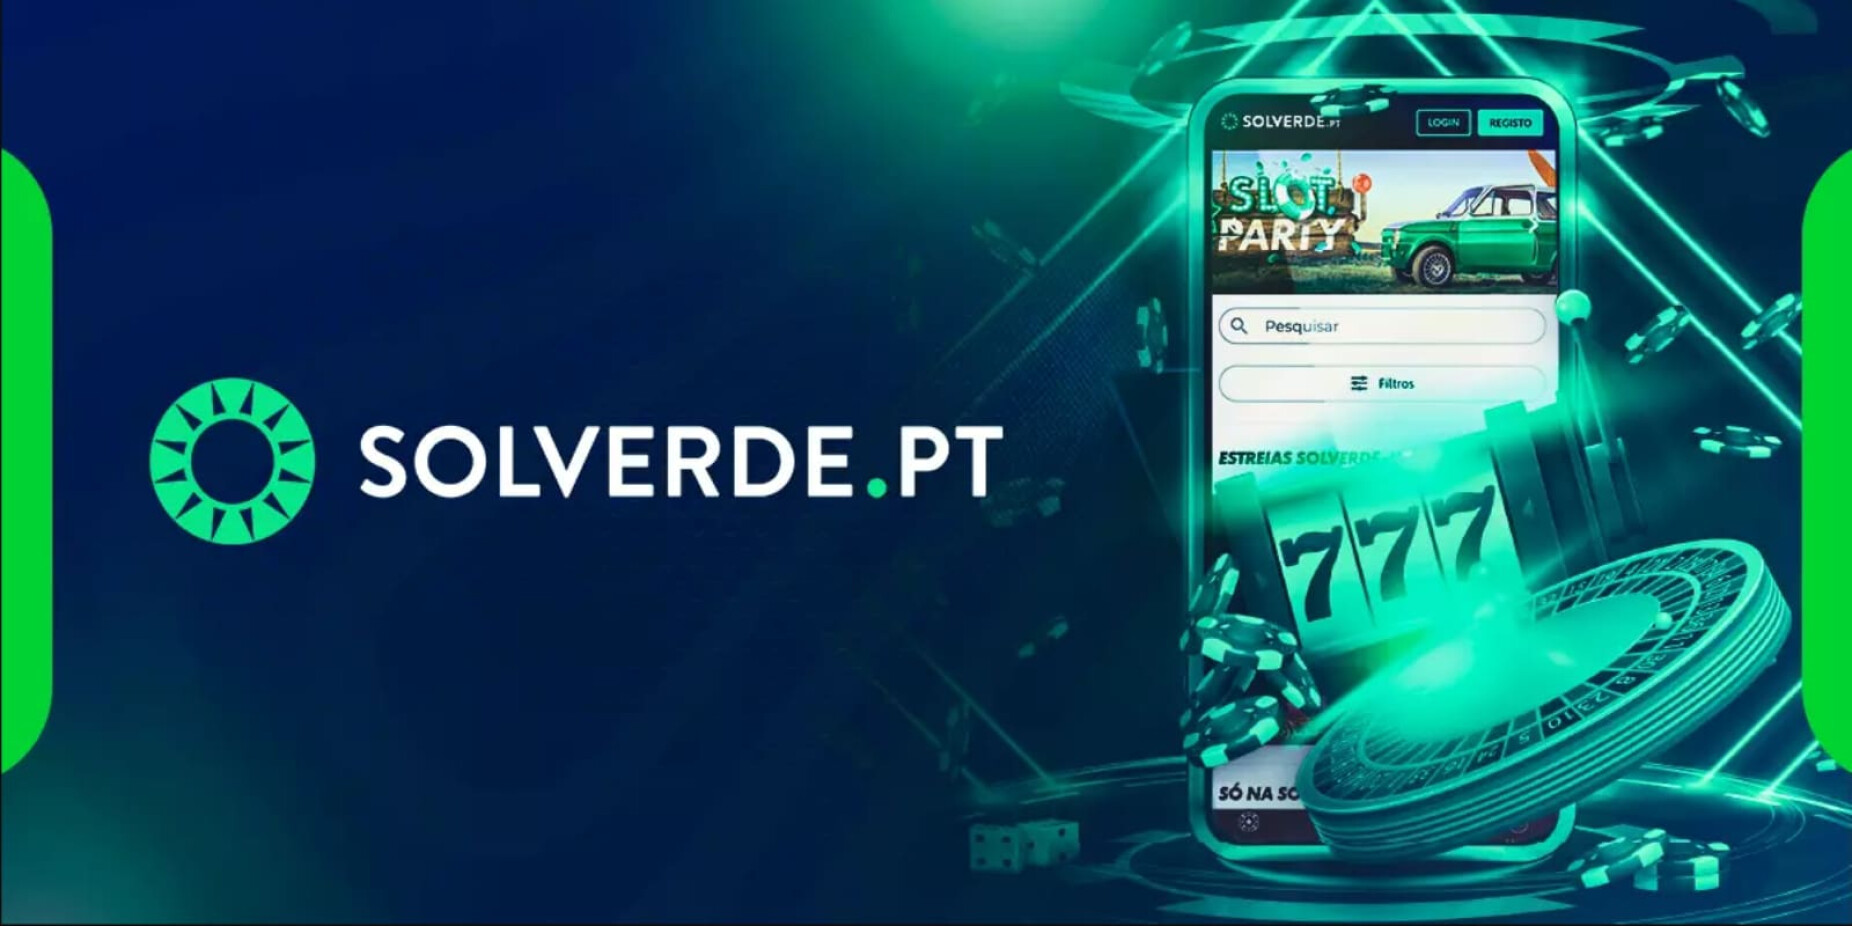 Solverde App - Download para iOS e Android